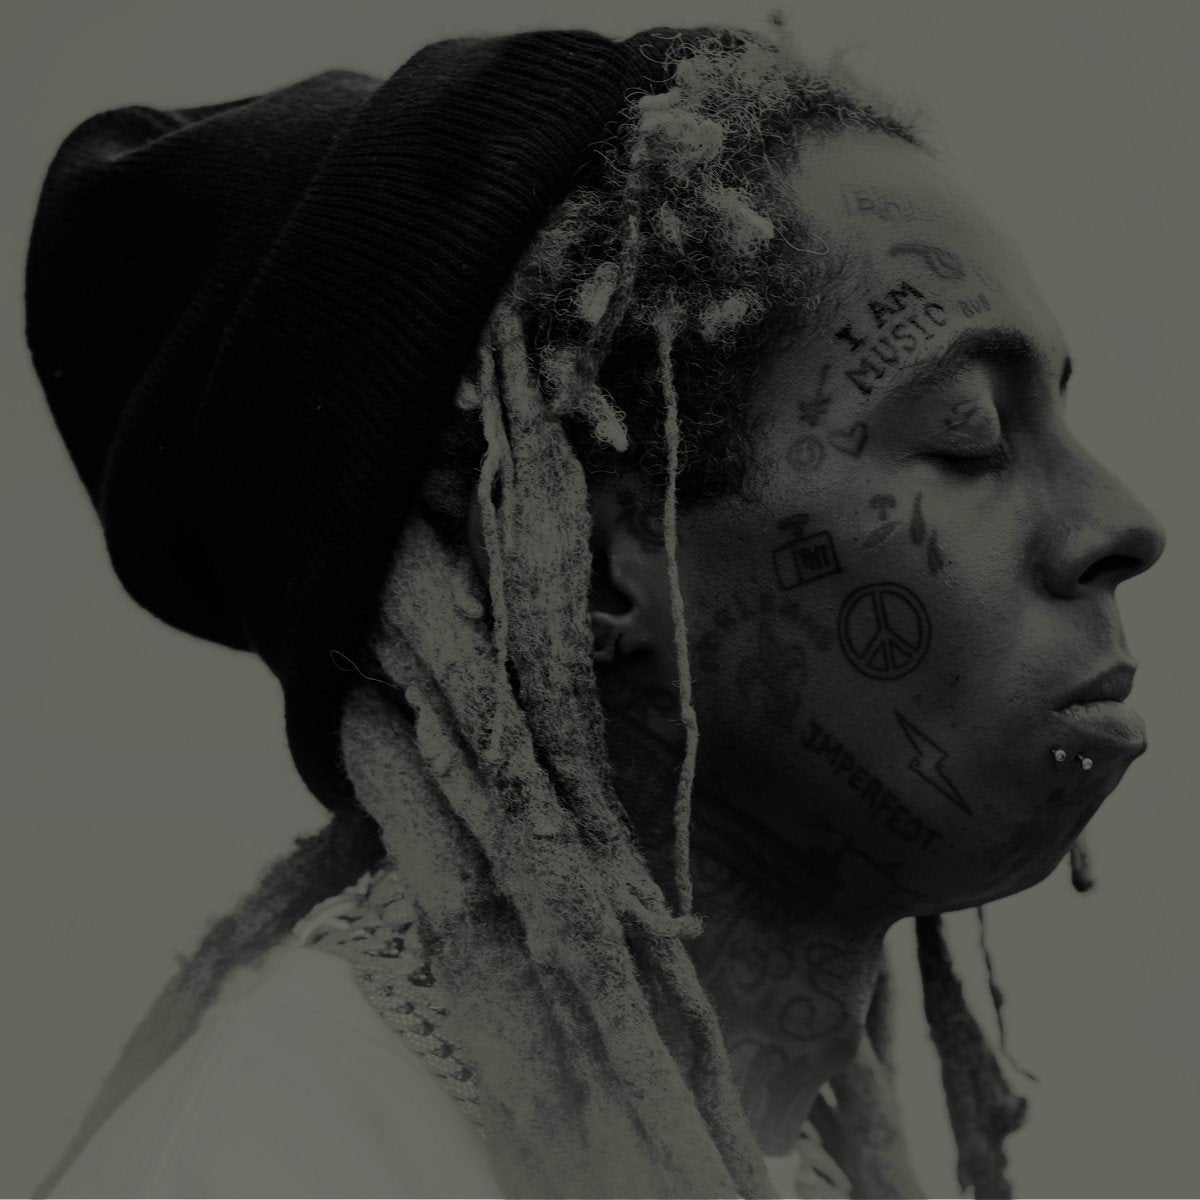 Lil Wayne - I Am Music - Double vinyle